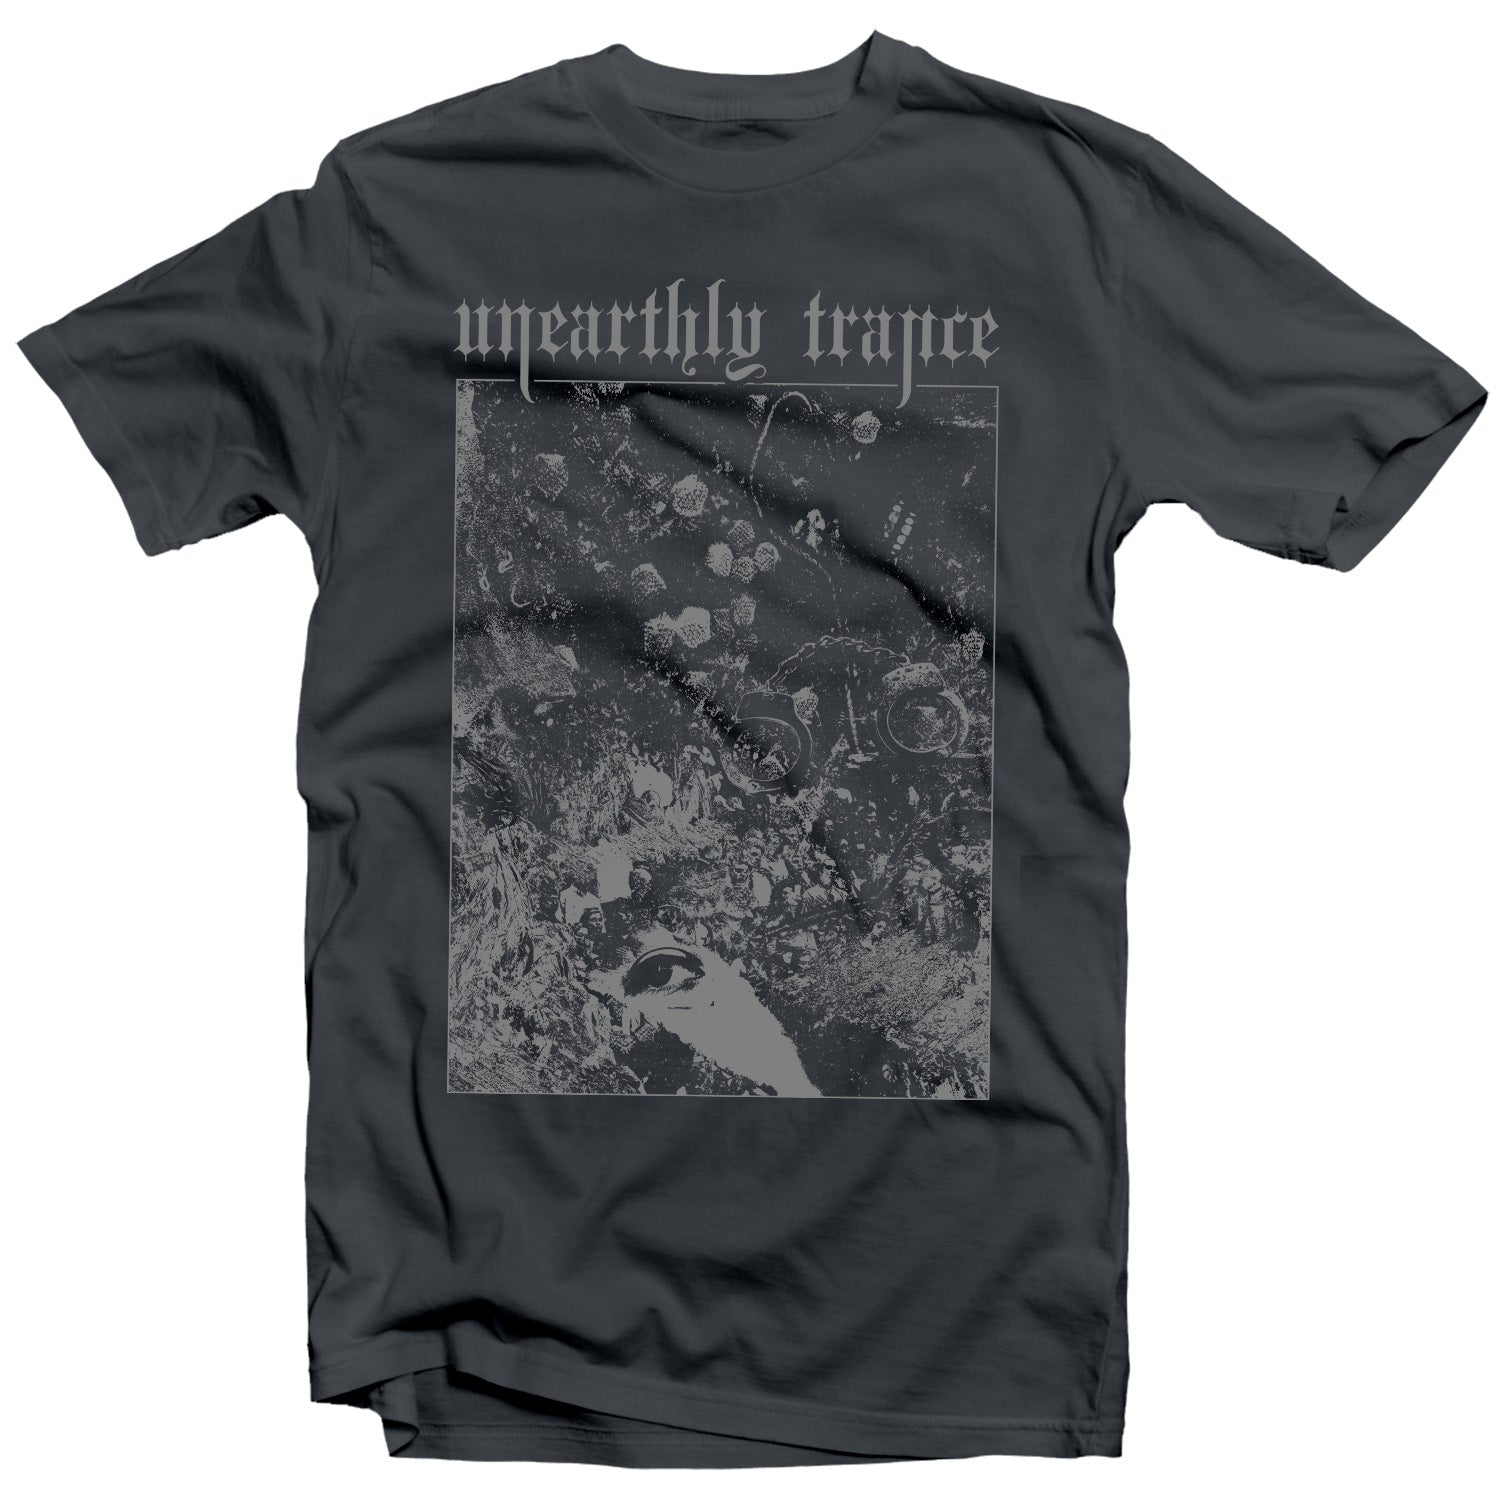 Unearthly Trance "Mechanism Error" T-Shirt